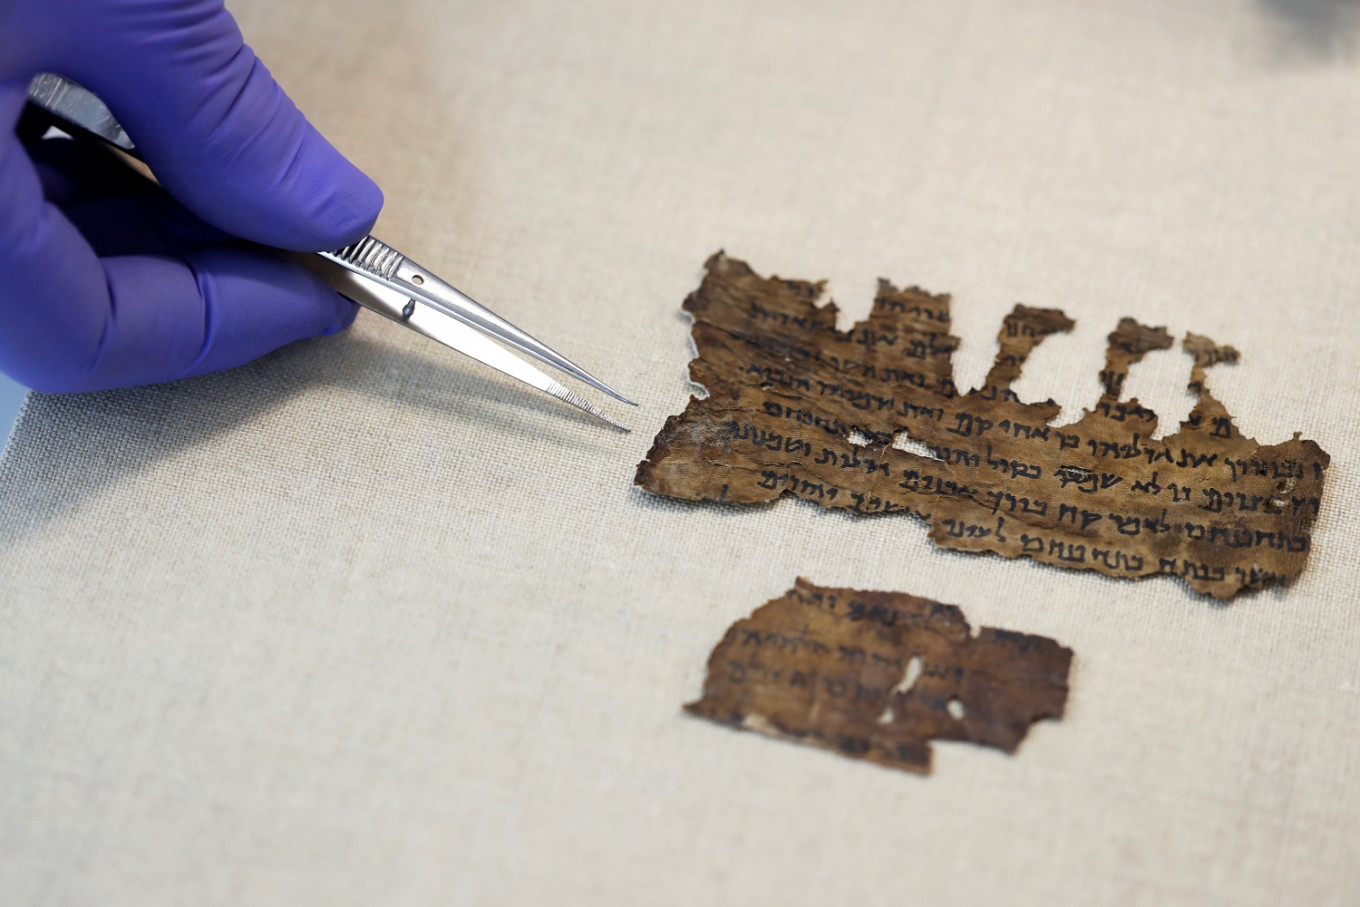 Hides that reveal: DNA helps scholars divine Dead Sea Scrolls